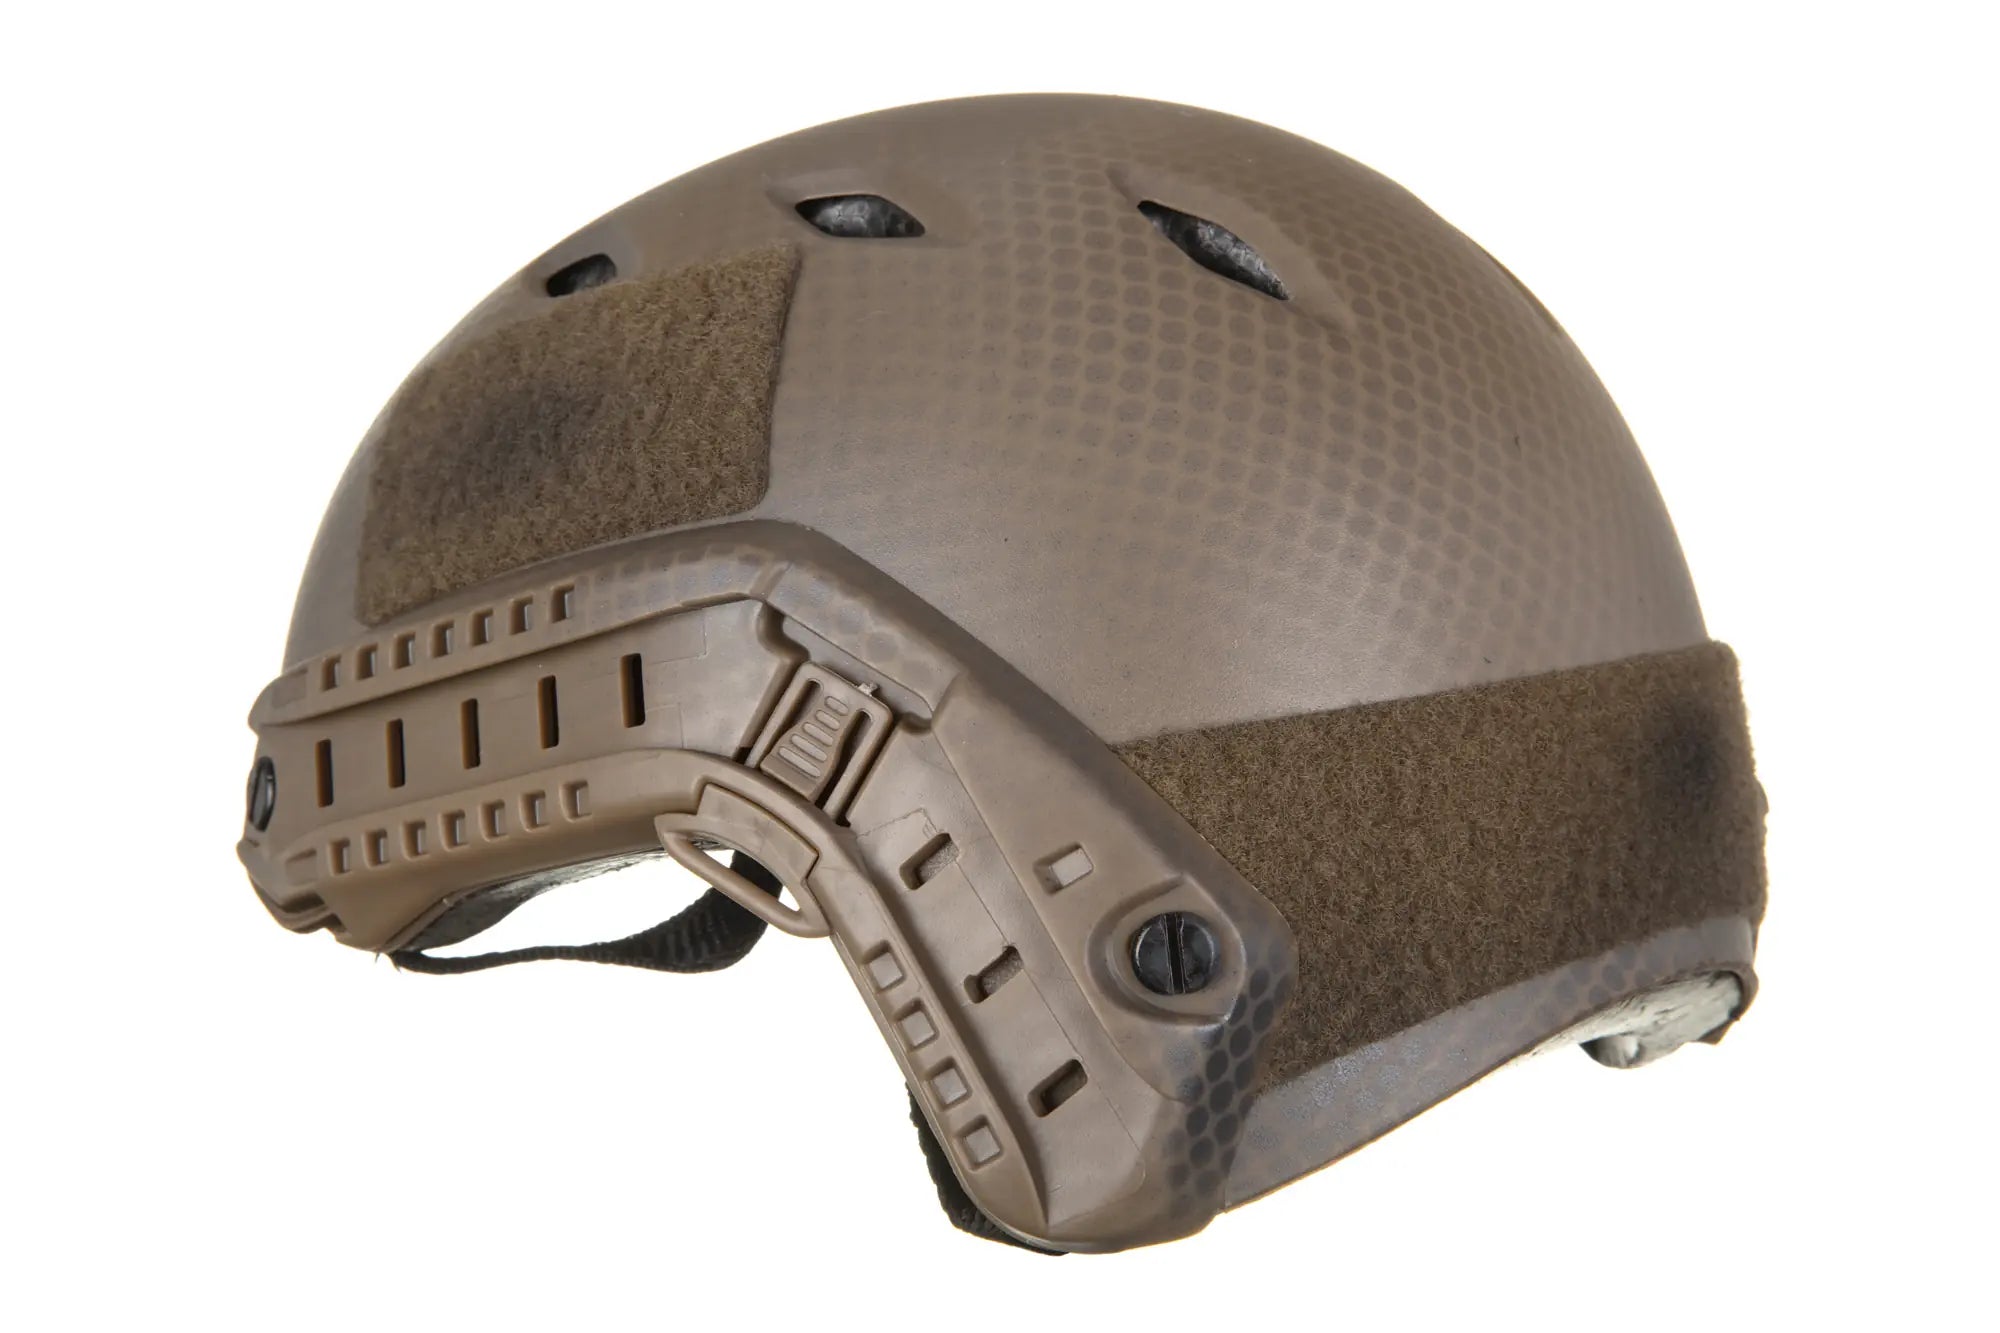 Replica of Emerson Gear FAST type BJ Eco Coyote Brown helmet